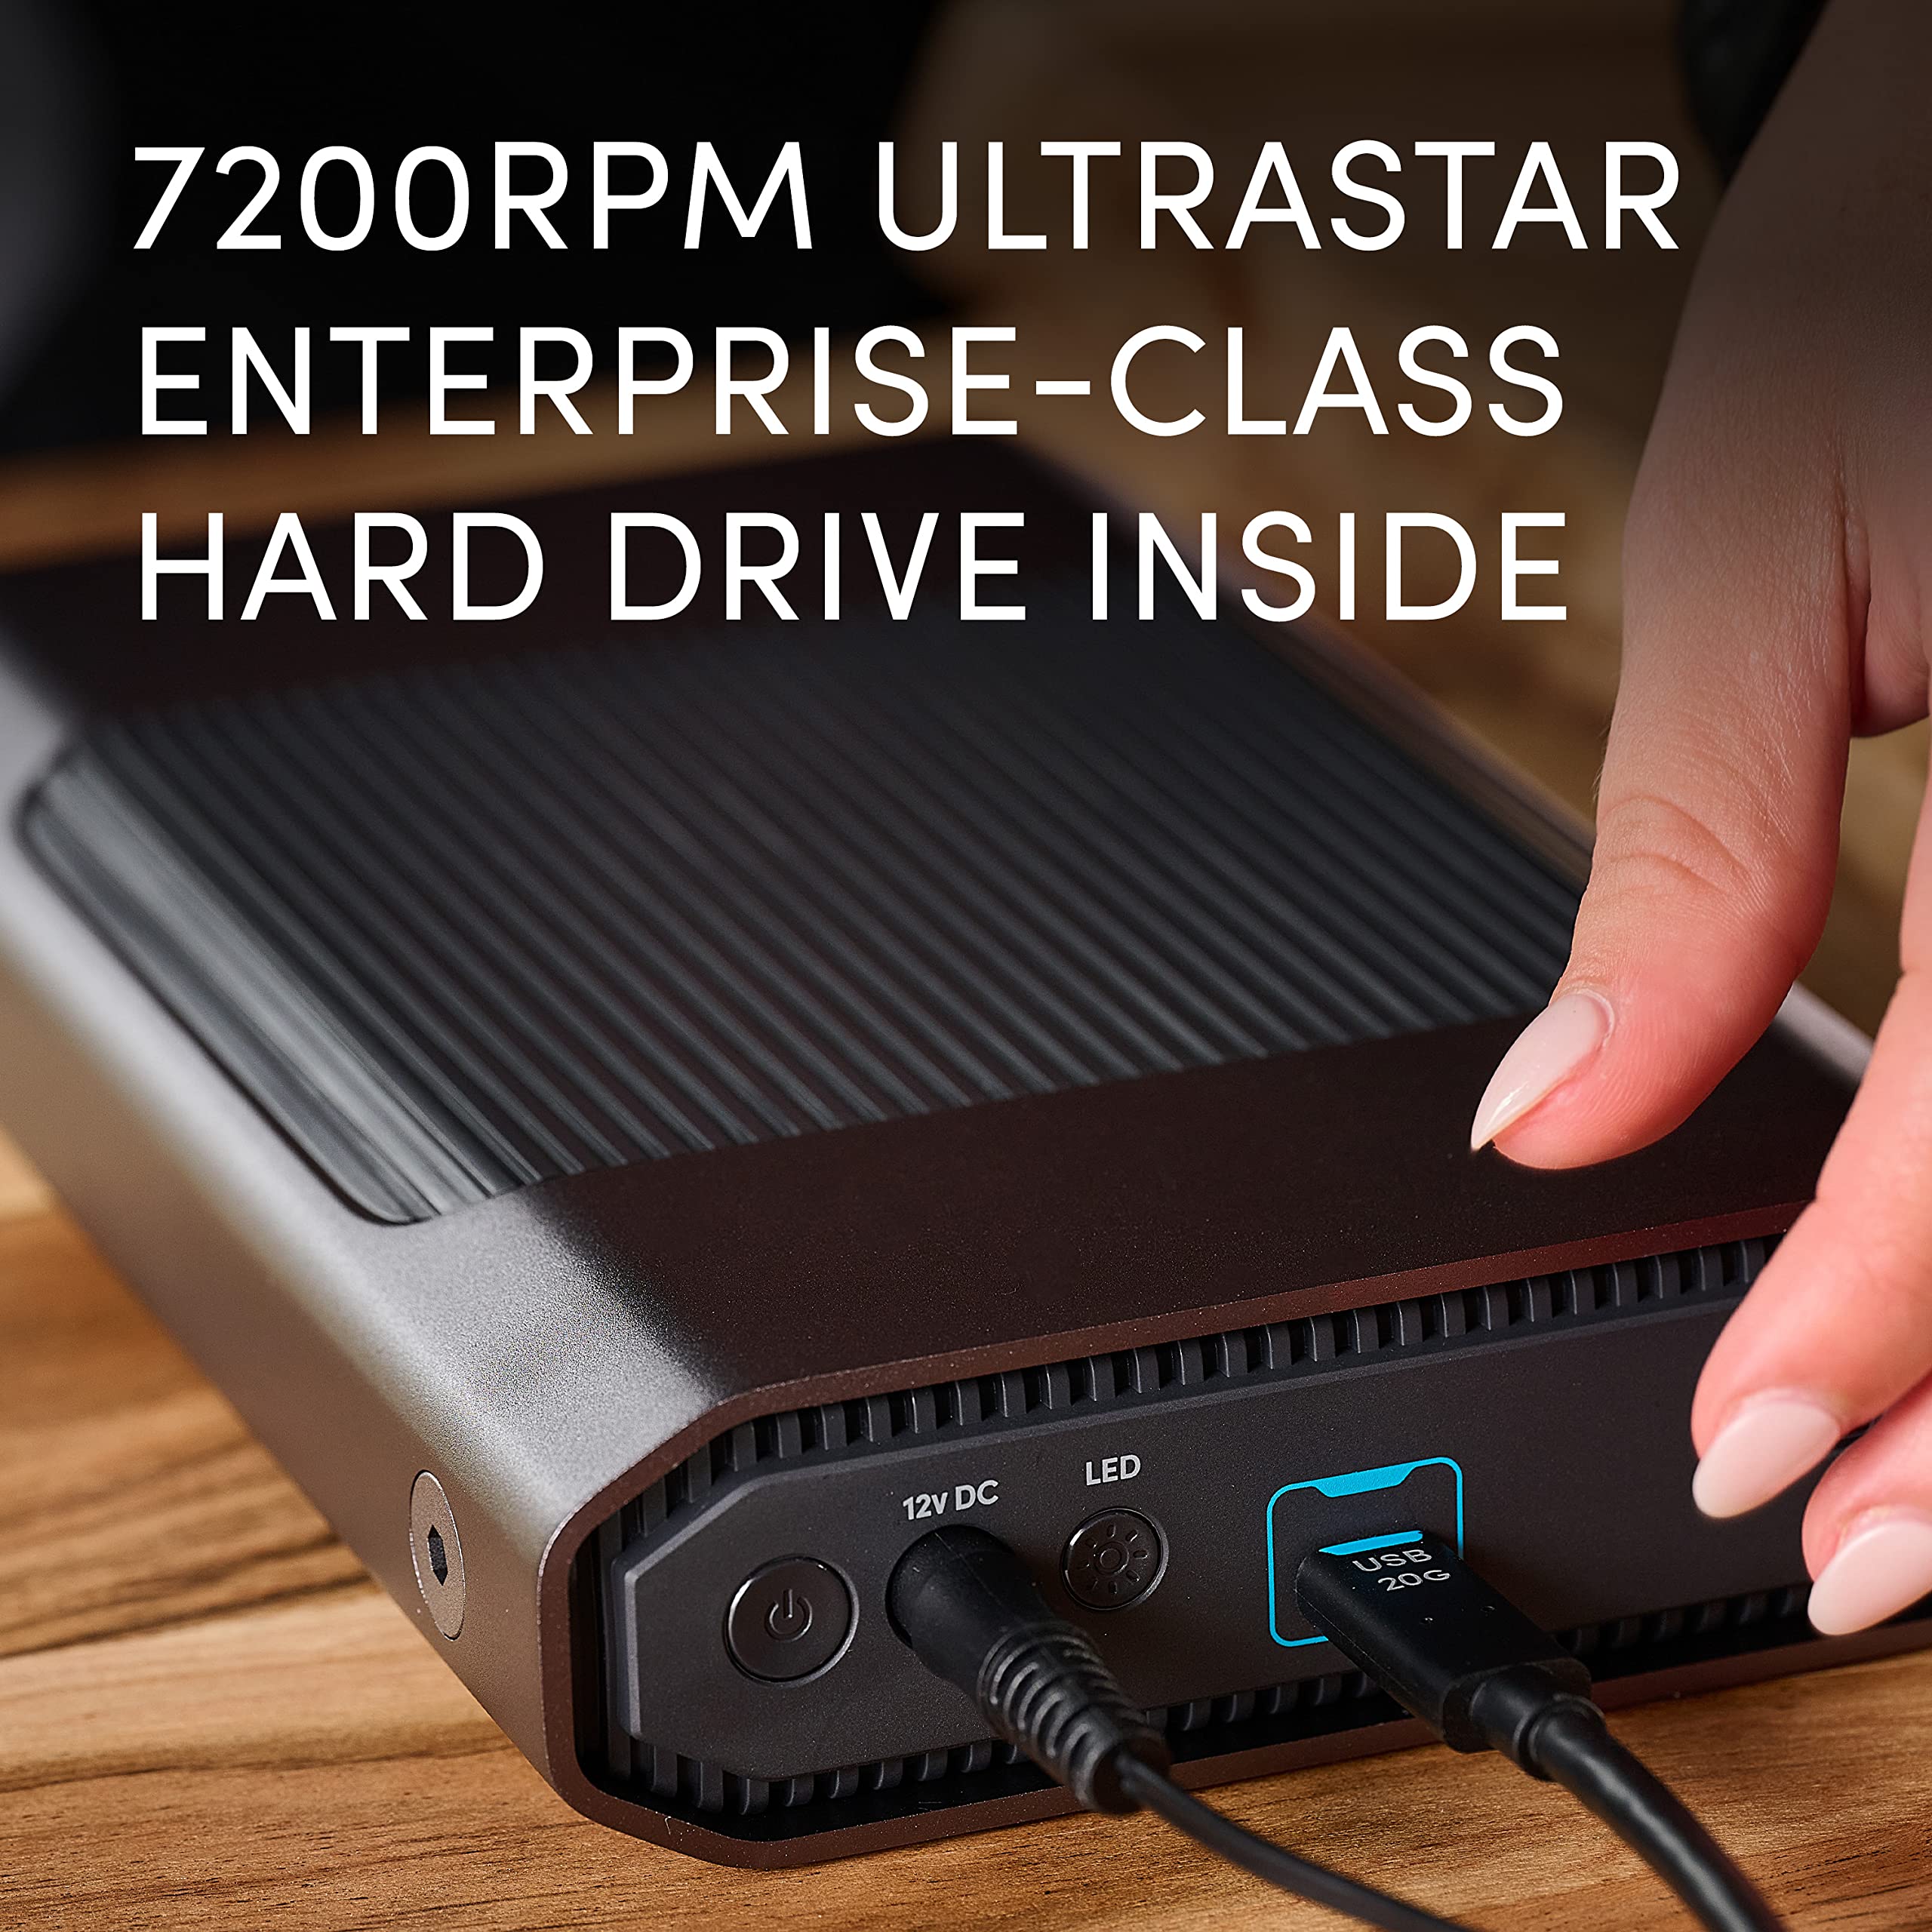 SanDisk Professional 22TB G-Drive Enterprise-Class External Desktop Hard Drive - 7200RPM Ultrastar HDD Inside, USB-C (10Gbps), USB 3.2 Gen 2, Mac Ready - SDPHF1A-022T-NBAAD, Dark Grey